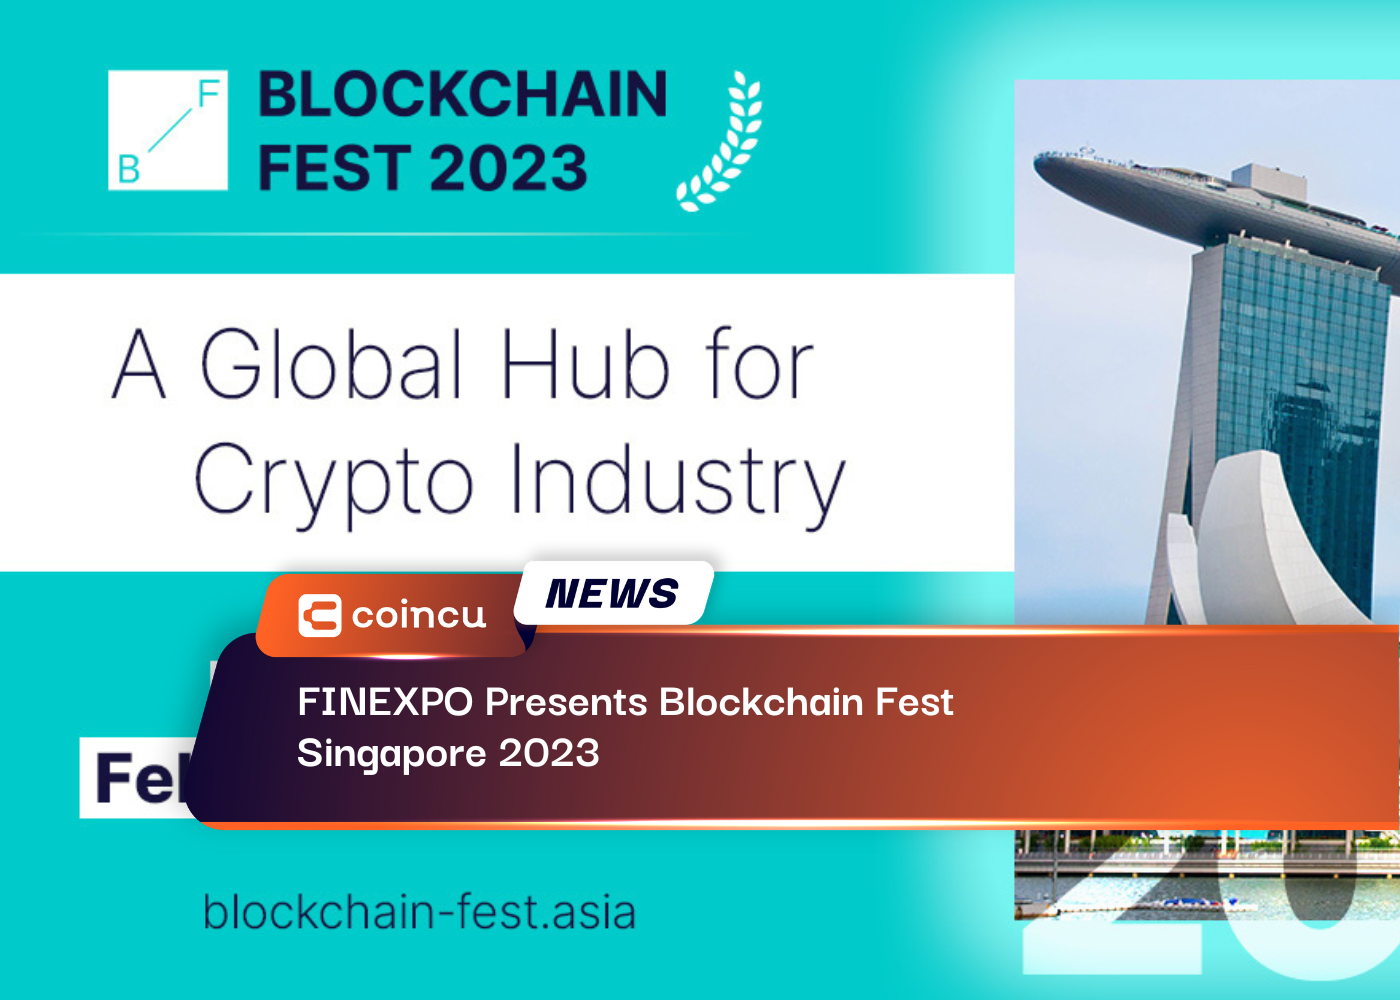 FINEXPO Presents Blockchain Fest